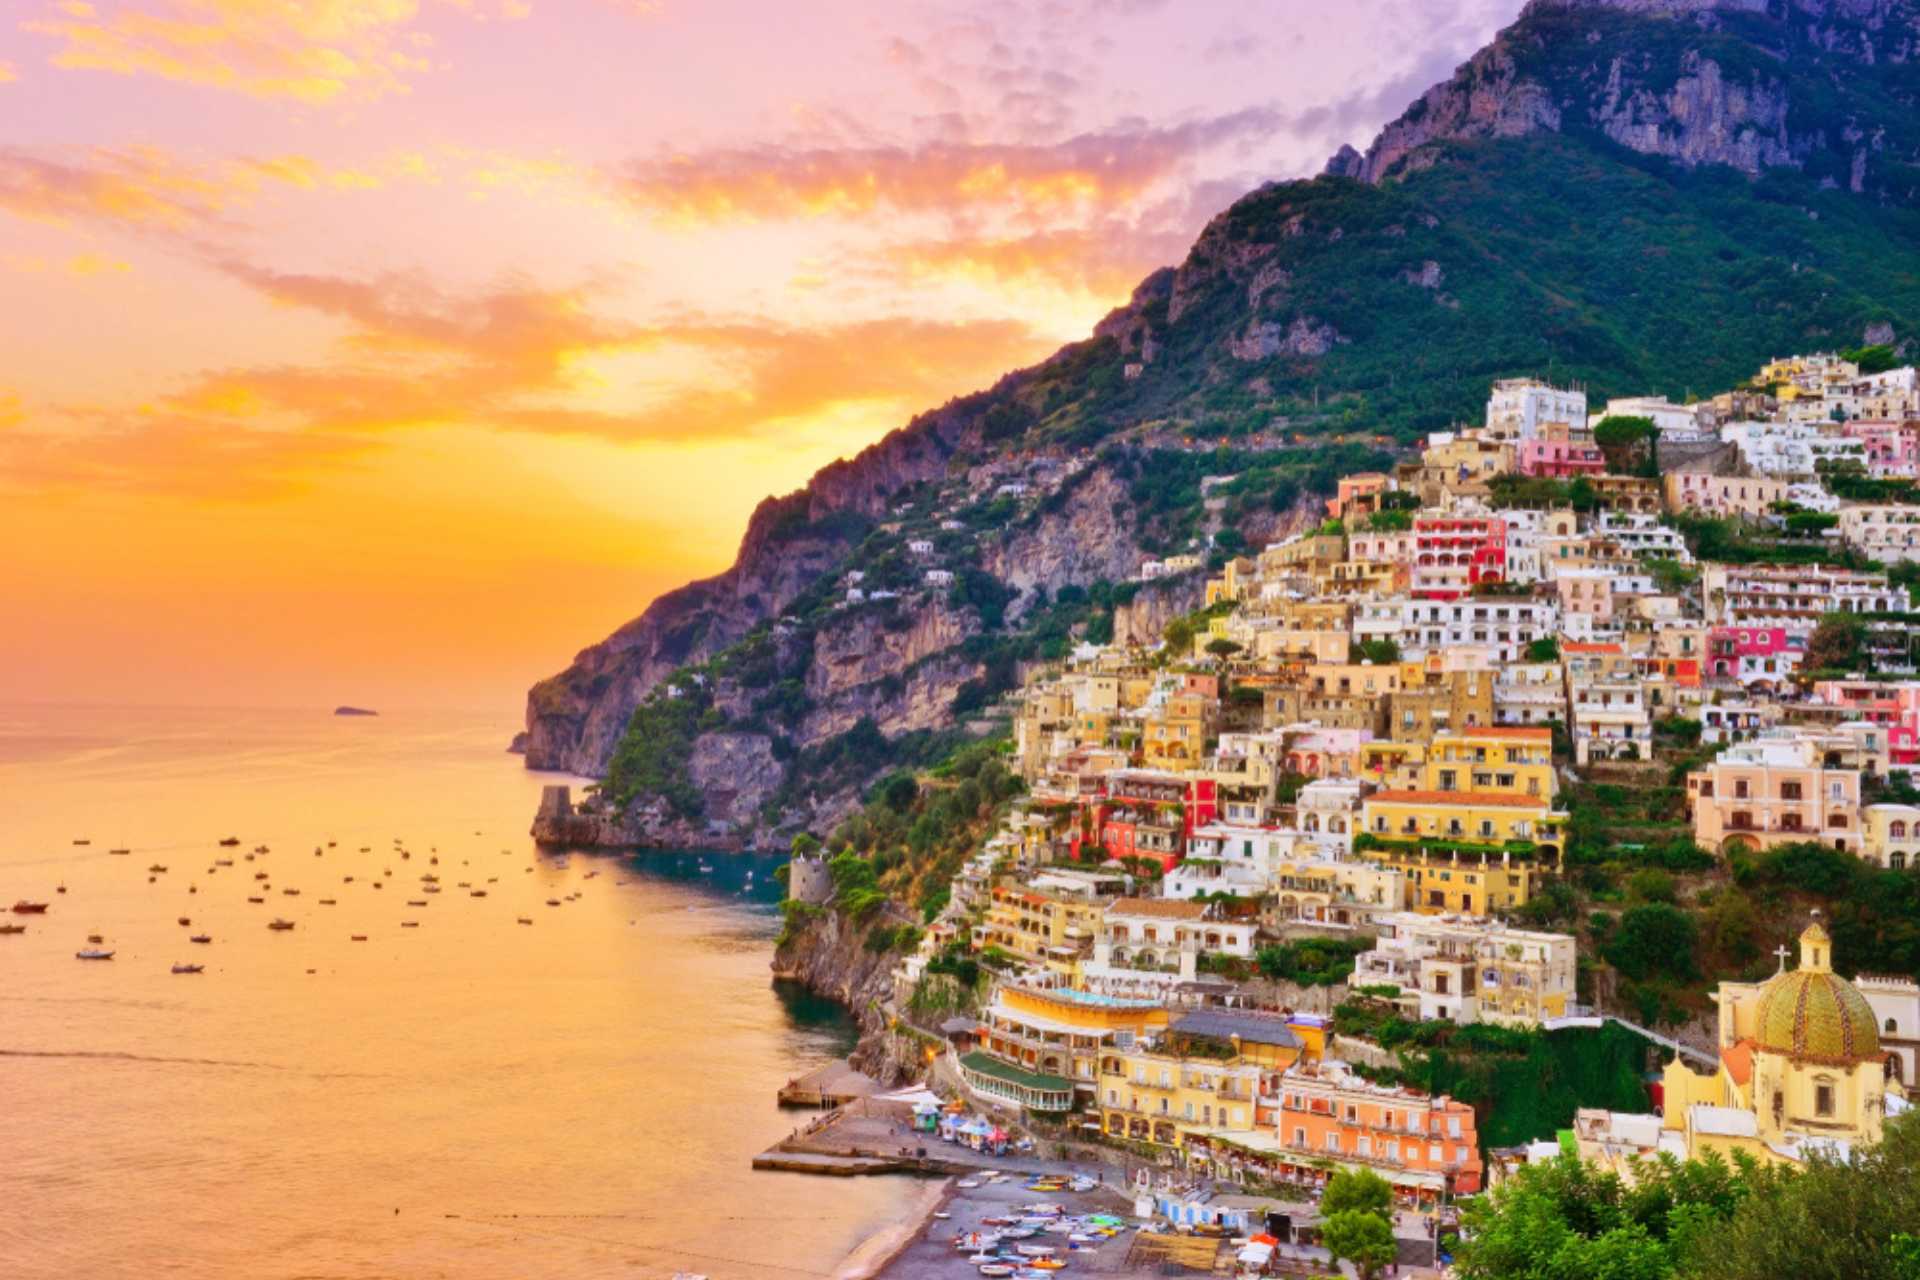 View of Positano village along Amalfi Coast in Italy at sunset. ©Shutterstock